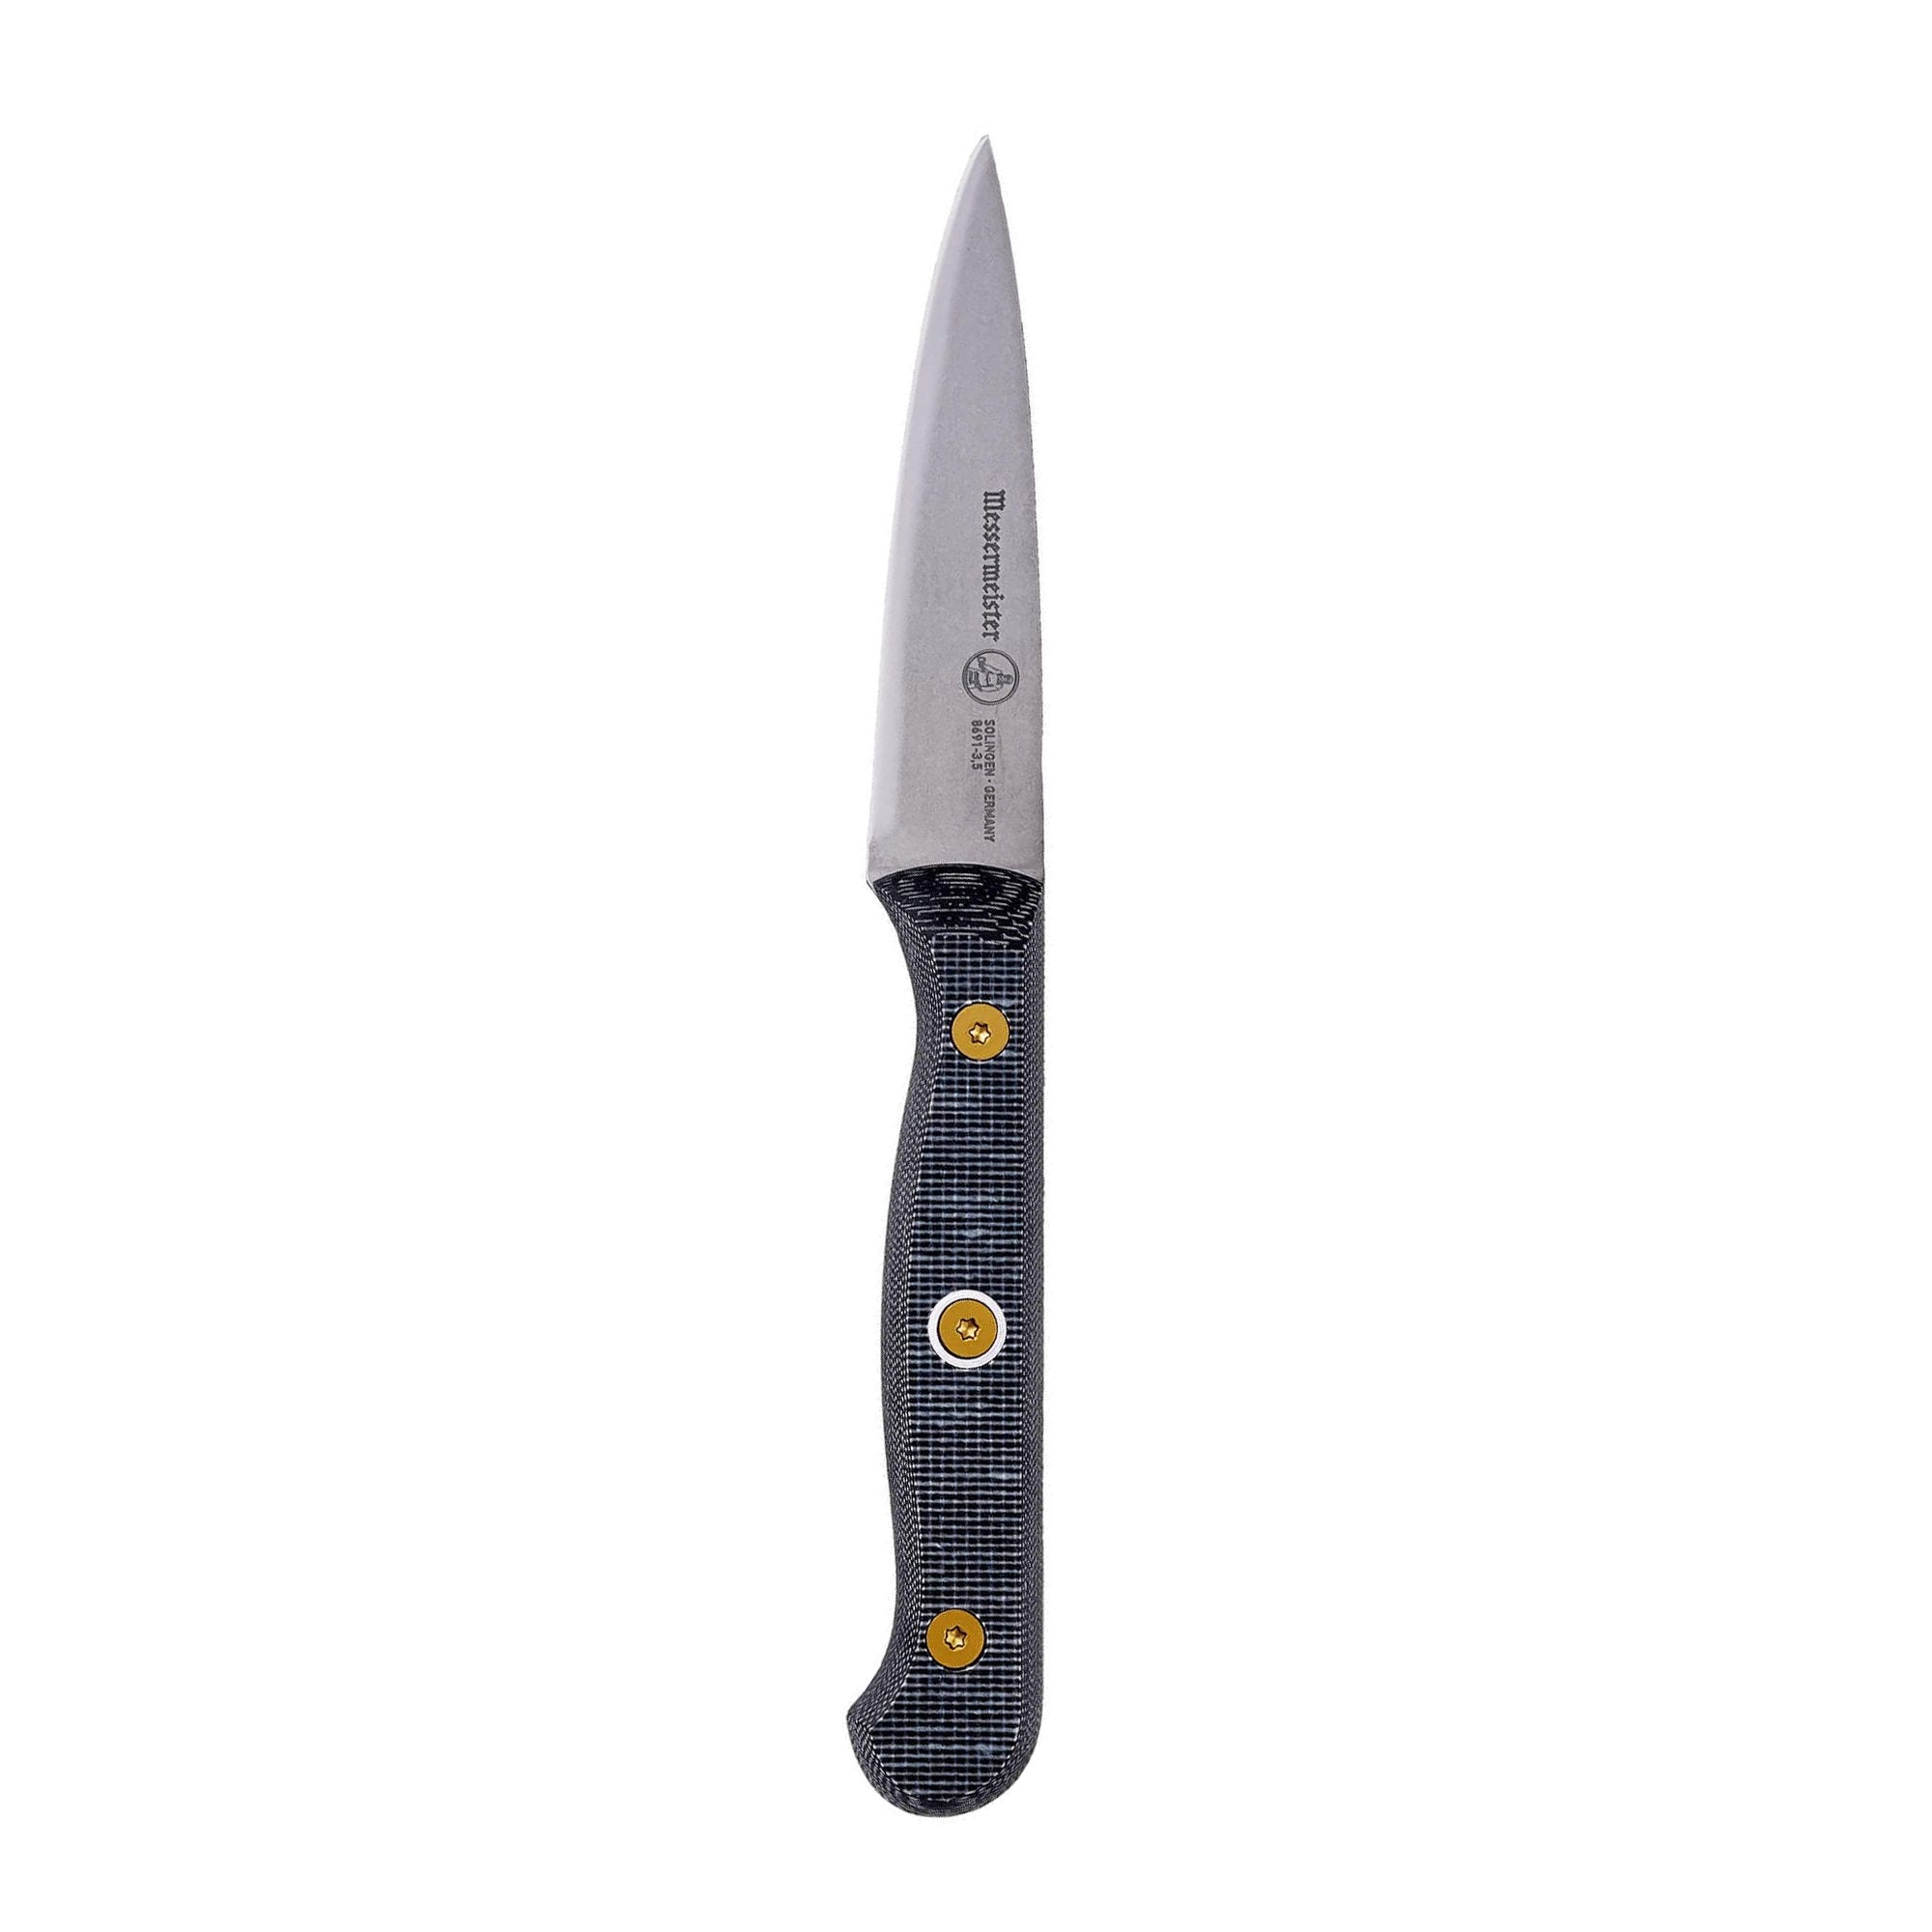 Custom 3.5 Inch Paring Knife